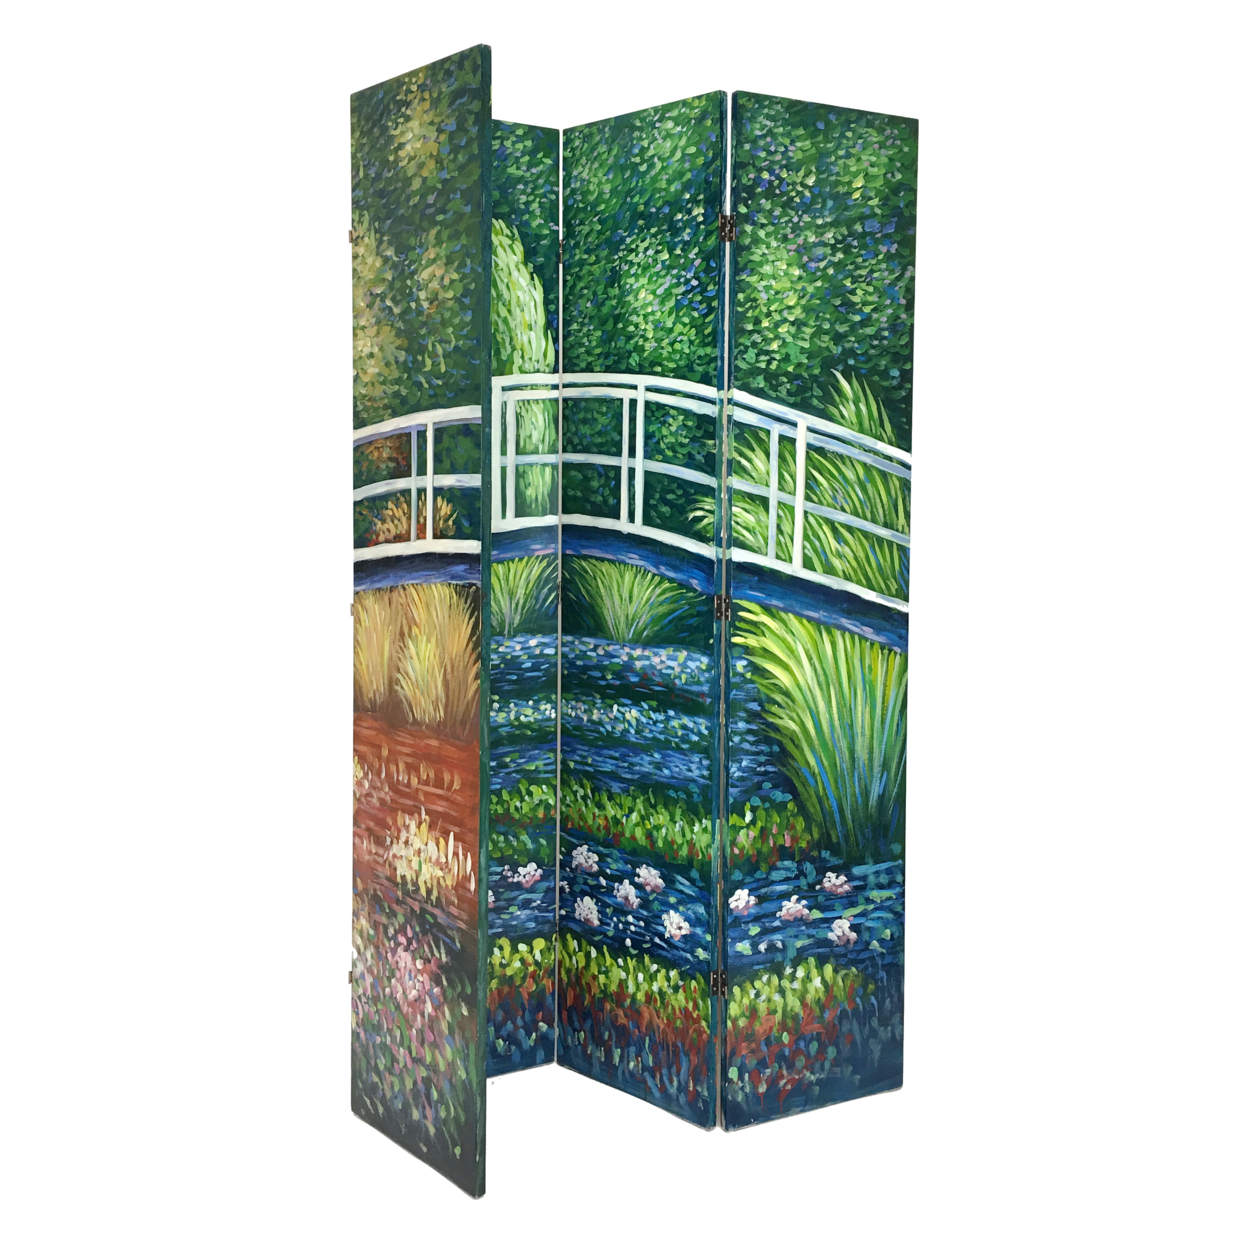 Wooden Double Sided 4 Panel Room Divider With Landscape Scene, Multicolor- Saltoro Sherpi